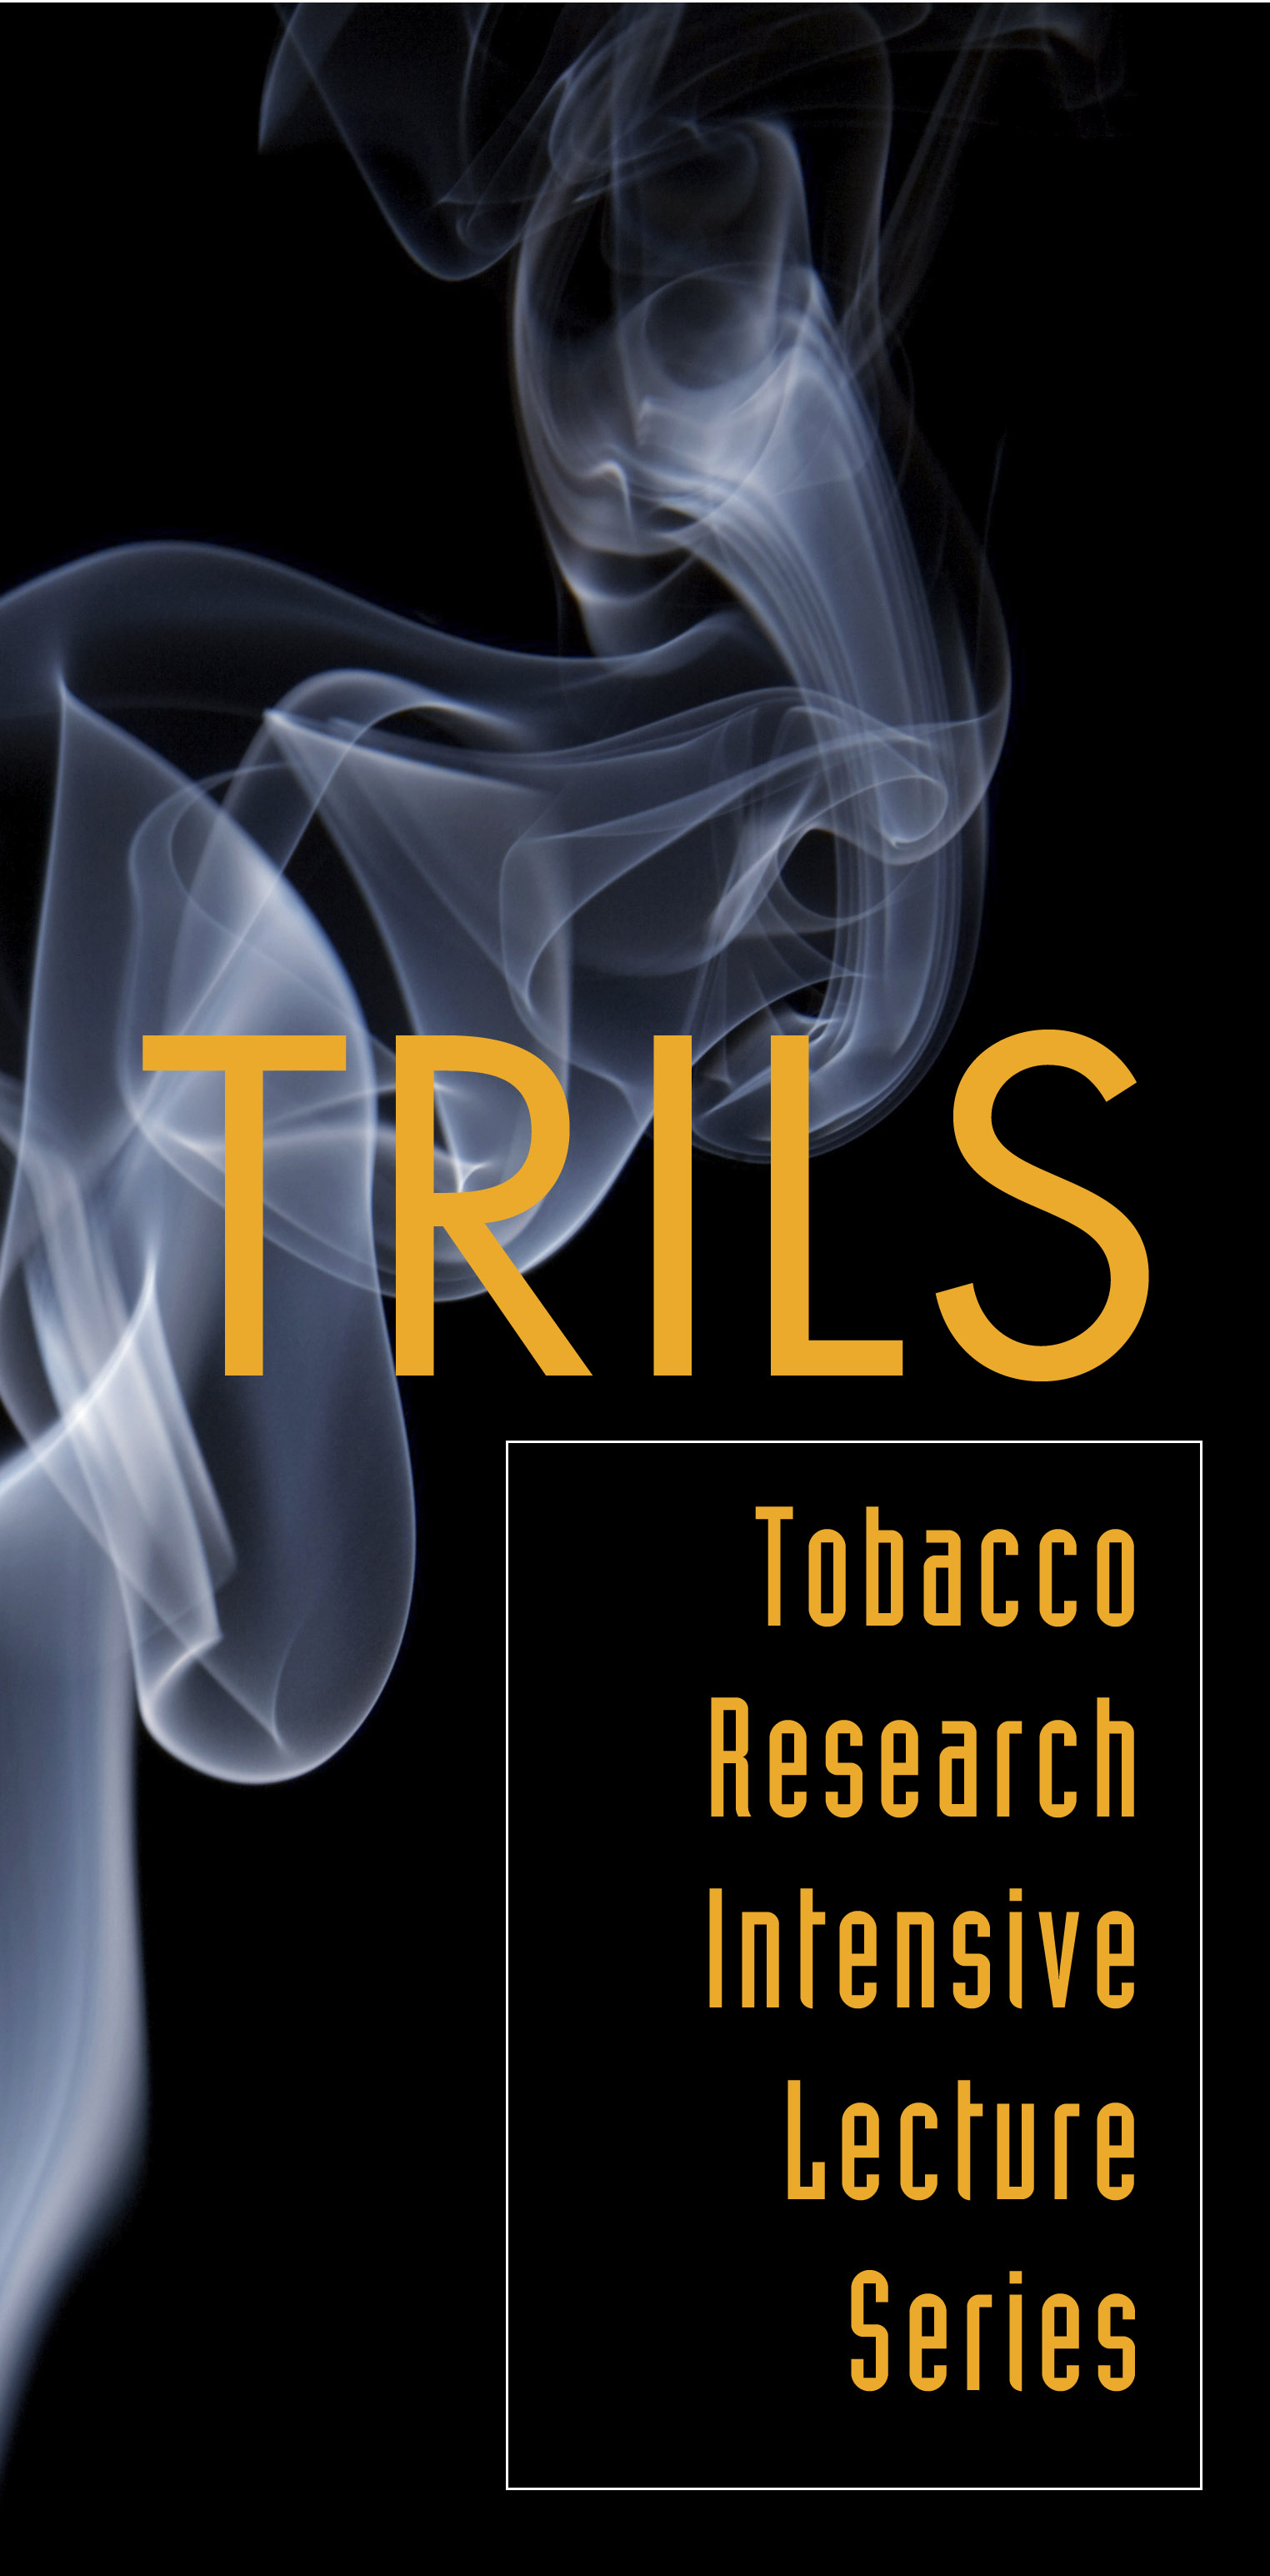 TRILS logo.jpg